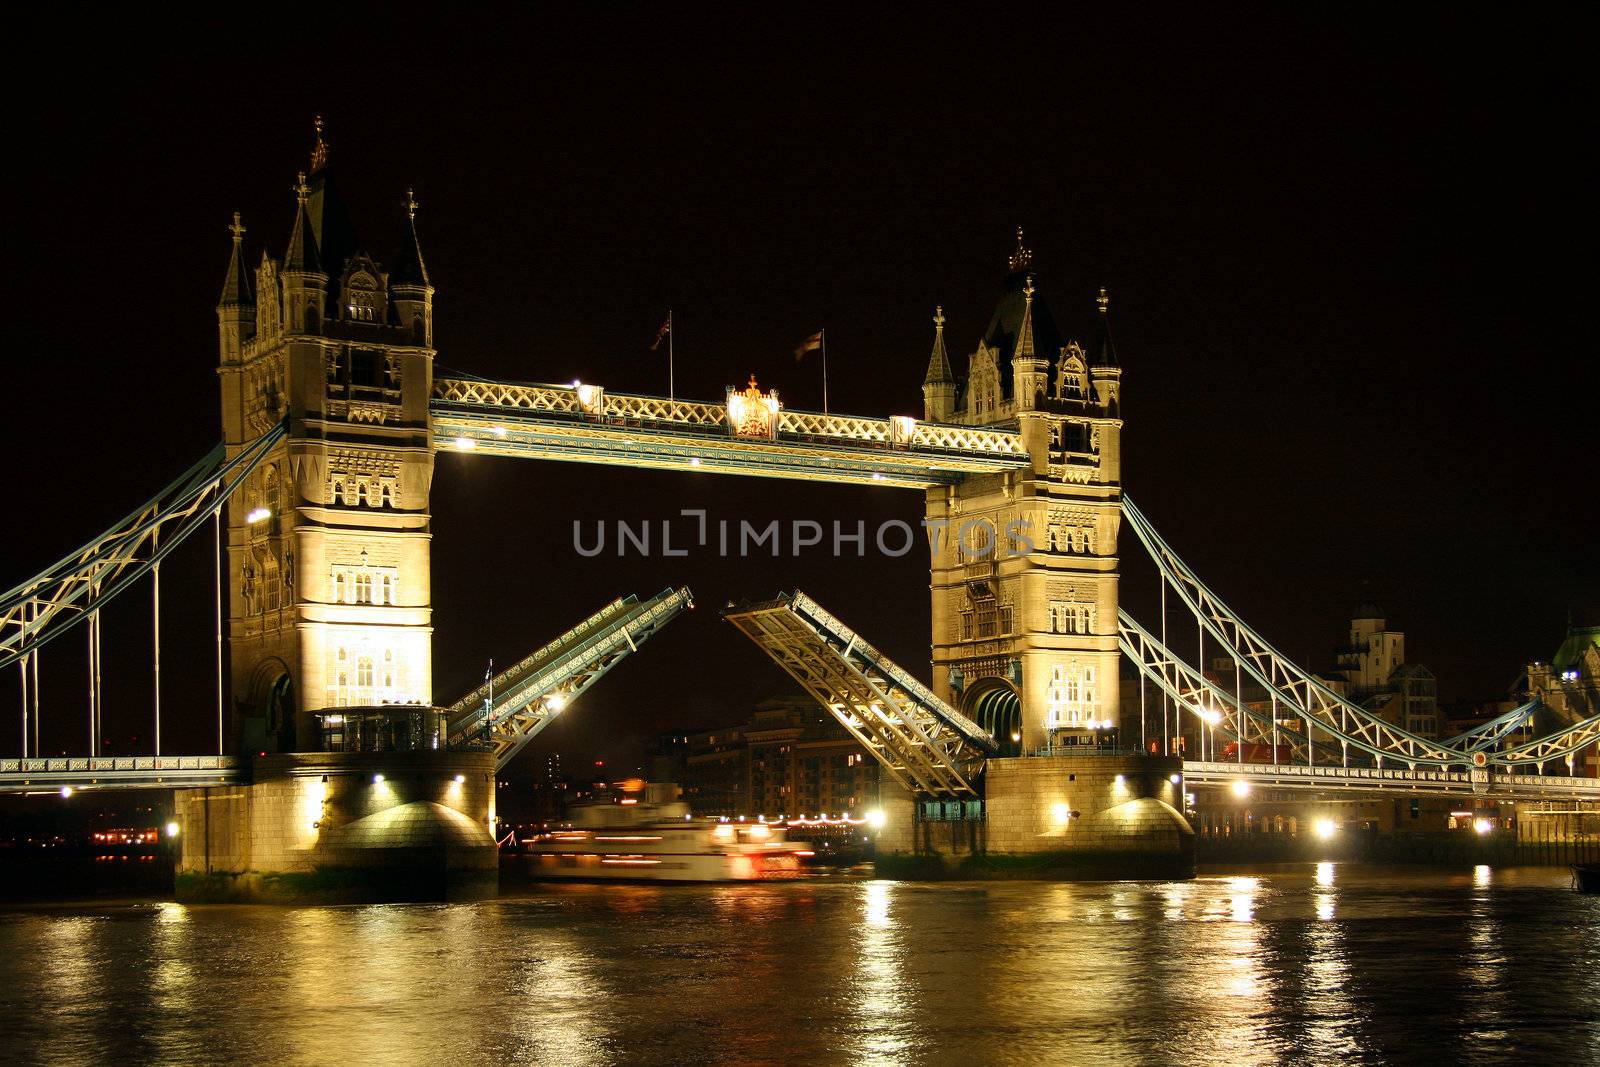 Tower Bridge Open   London  U.K.
Low Light Photography  (LLP)